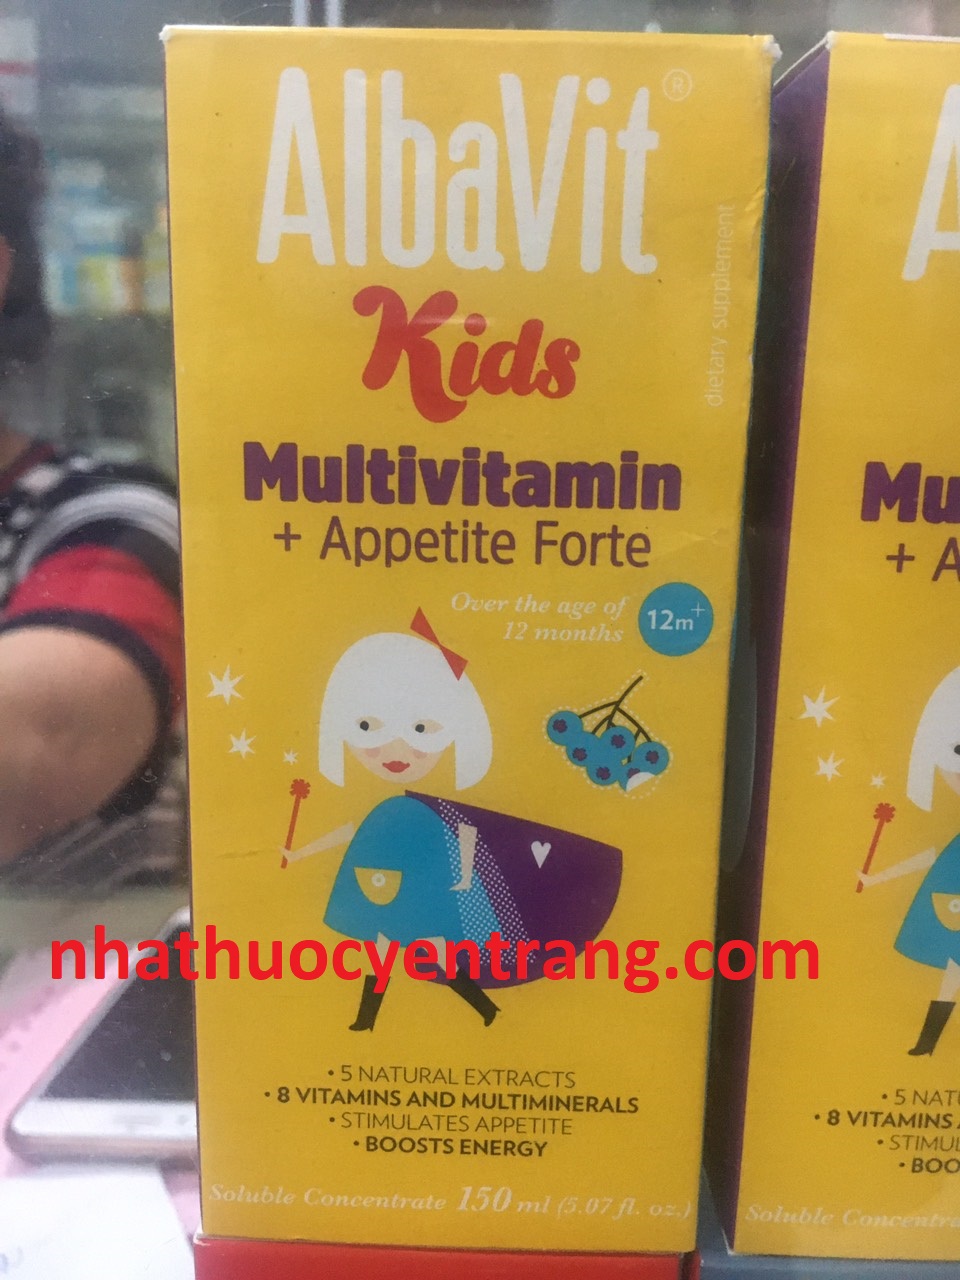 Albavit kids Multivitamin + Appetite